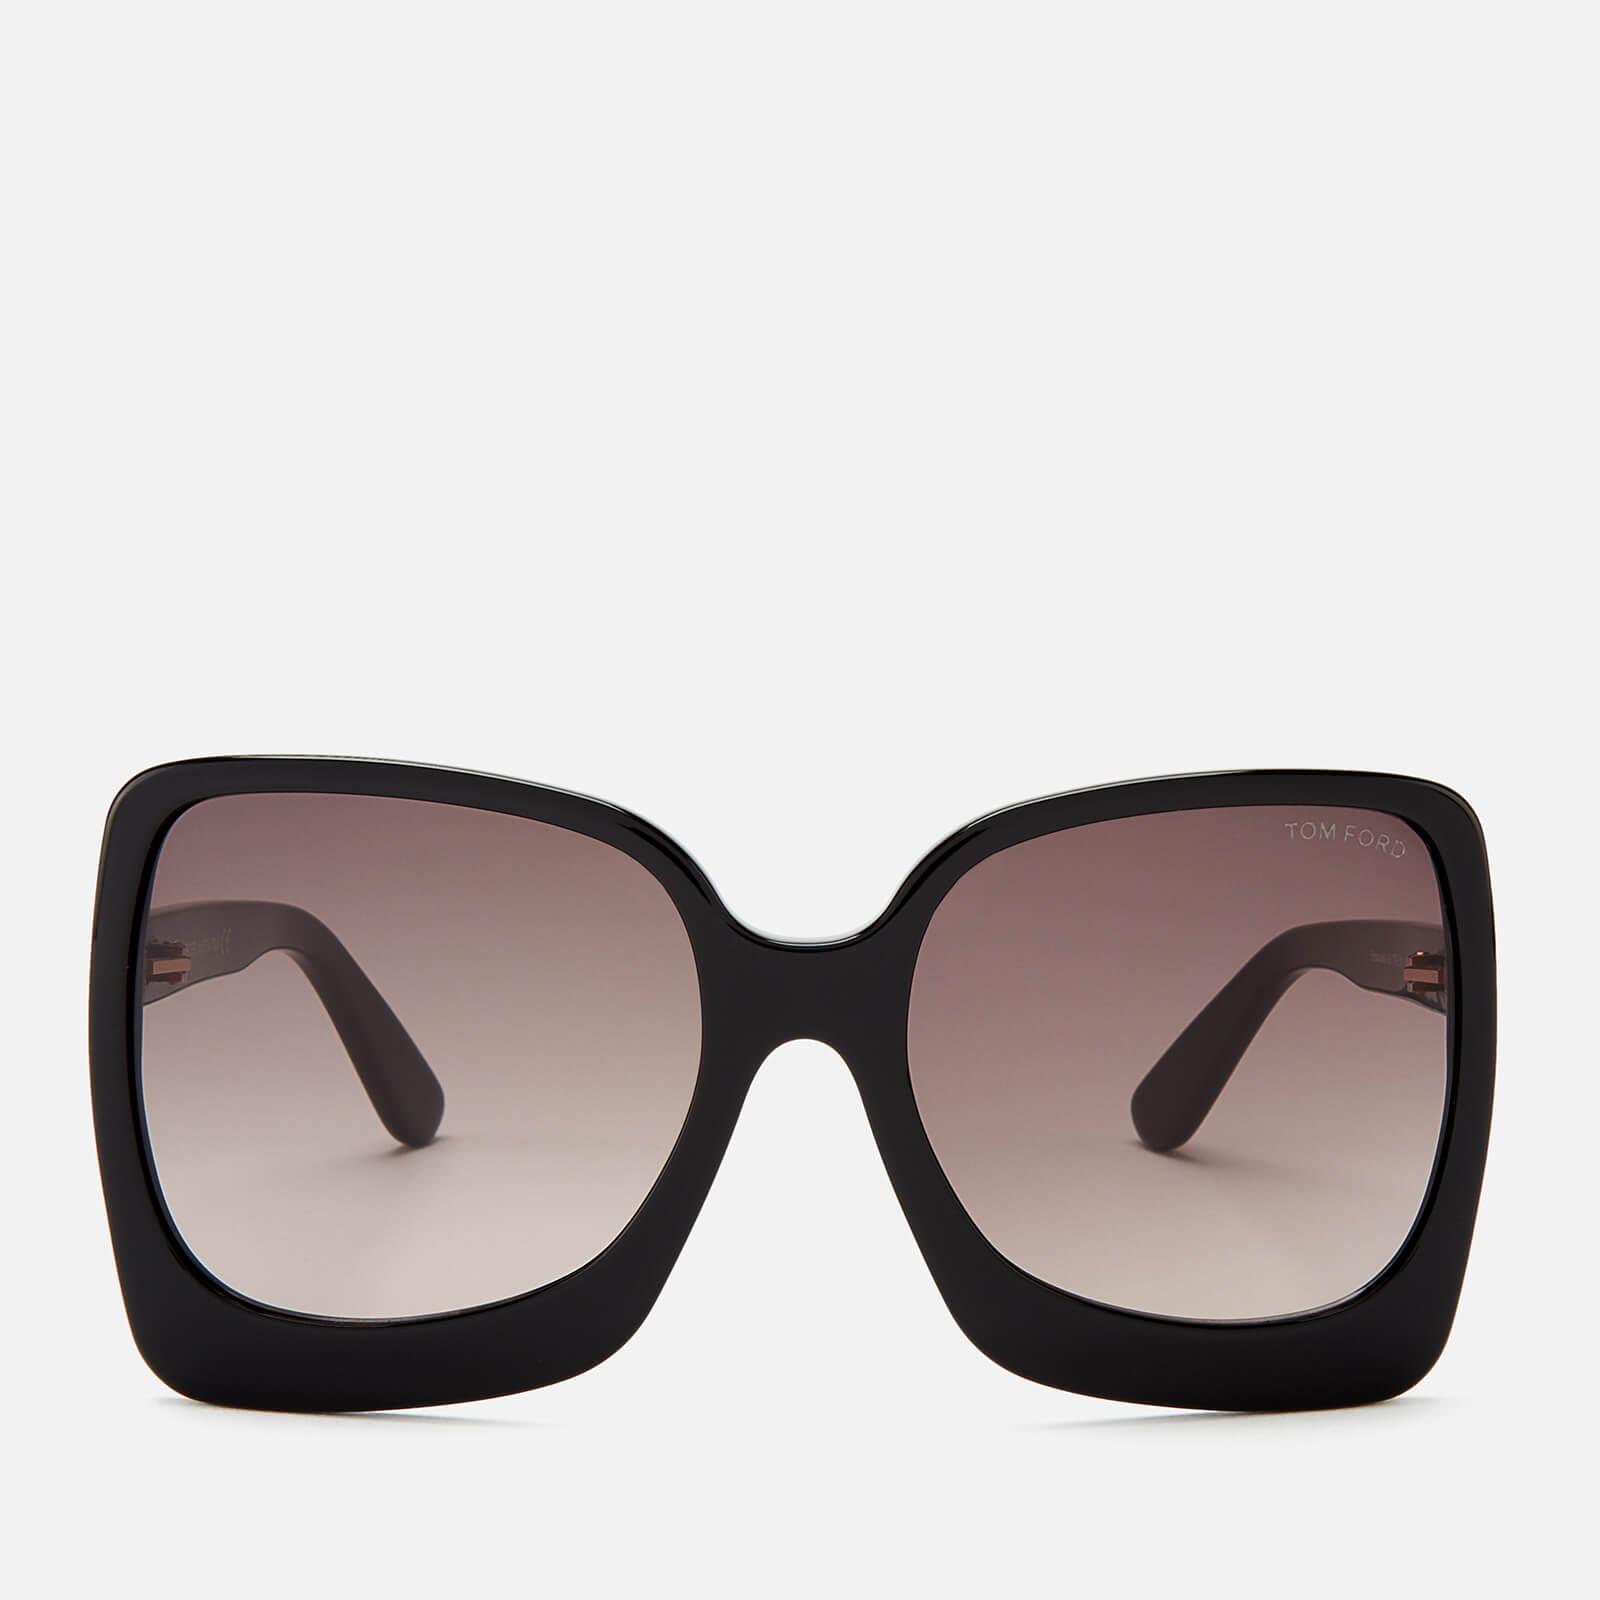 Tom Ford Emmanuella Sunglasses in Black - Lyst